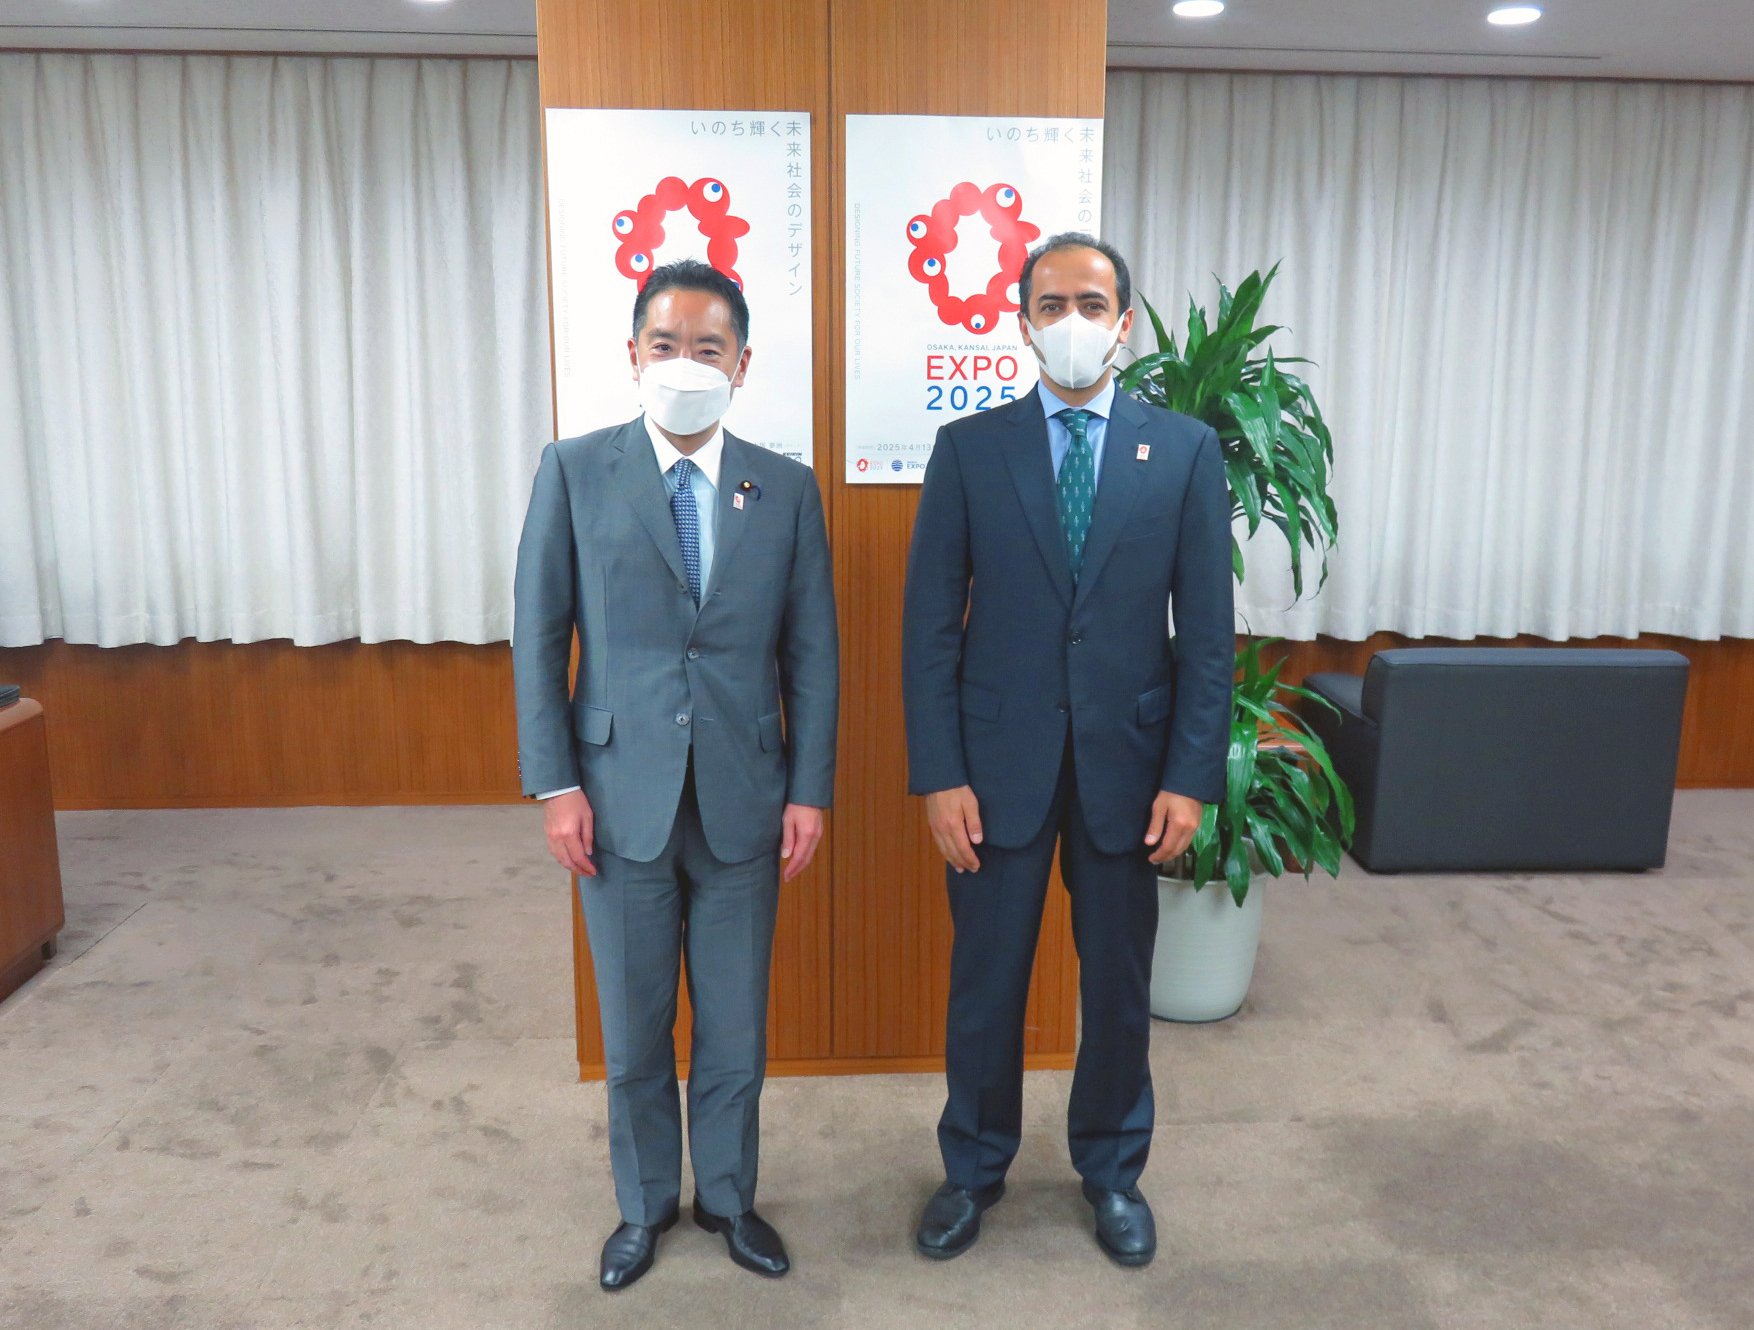 Photo Session: Minister Inoue and Ambassador AlFaheem.